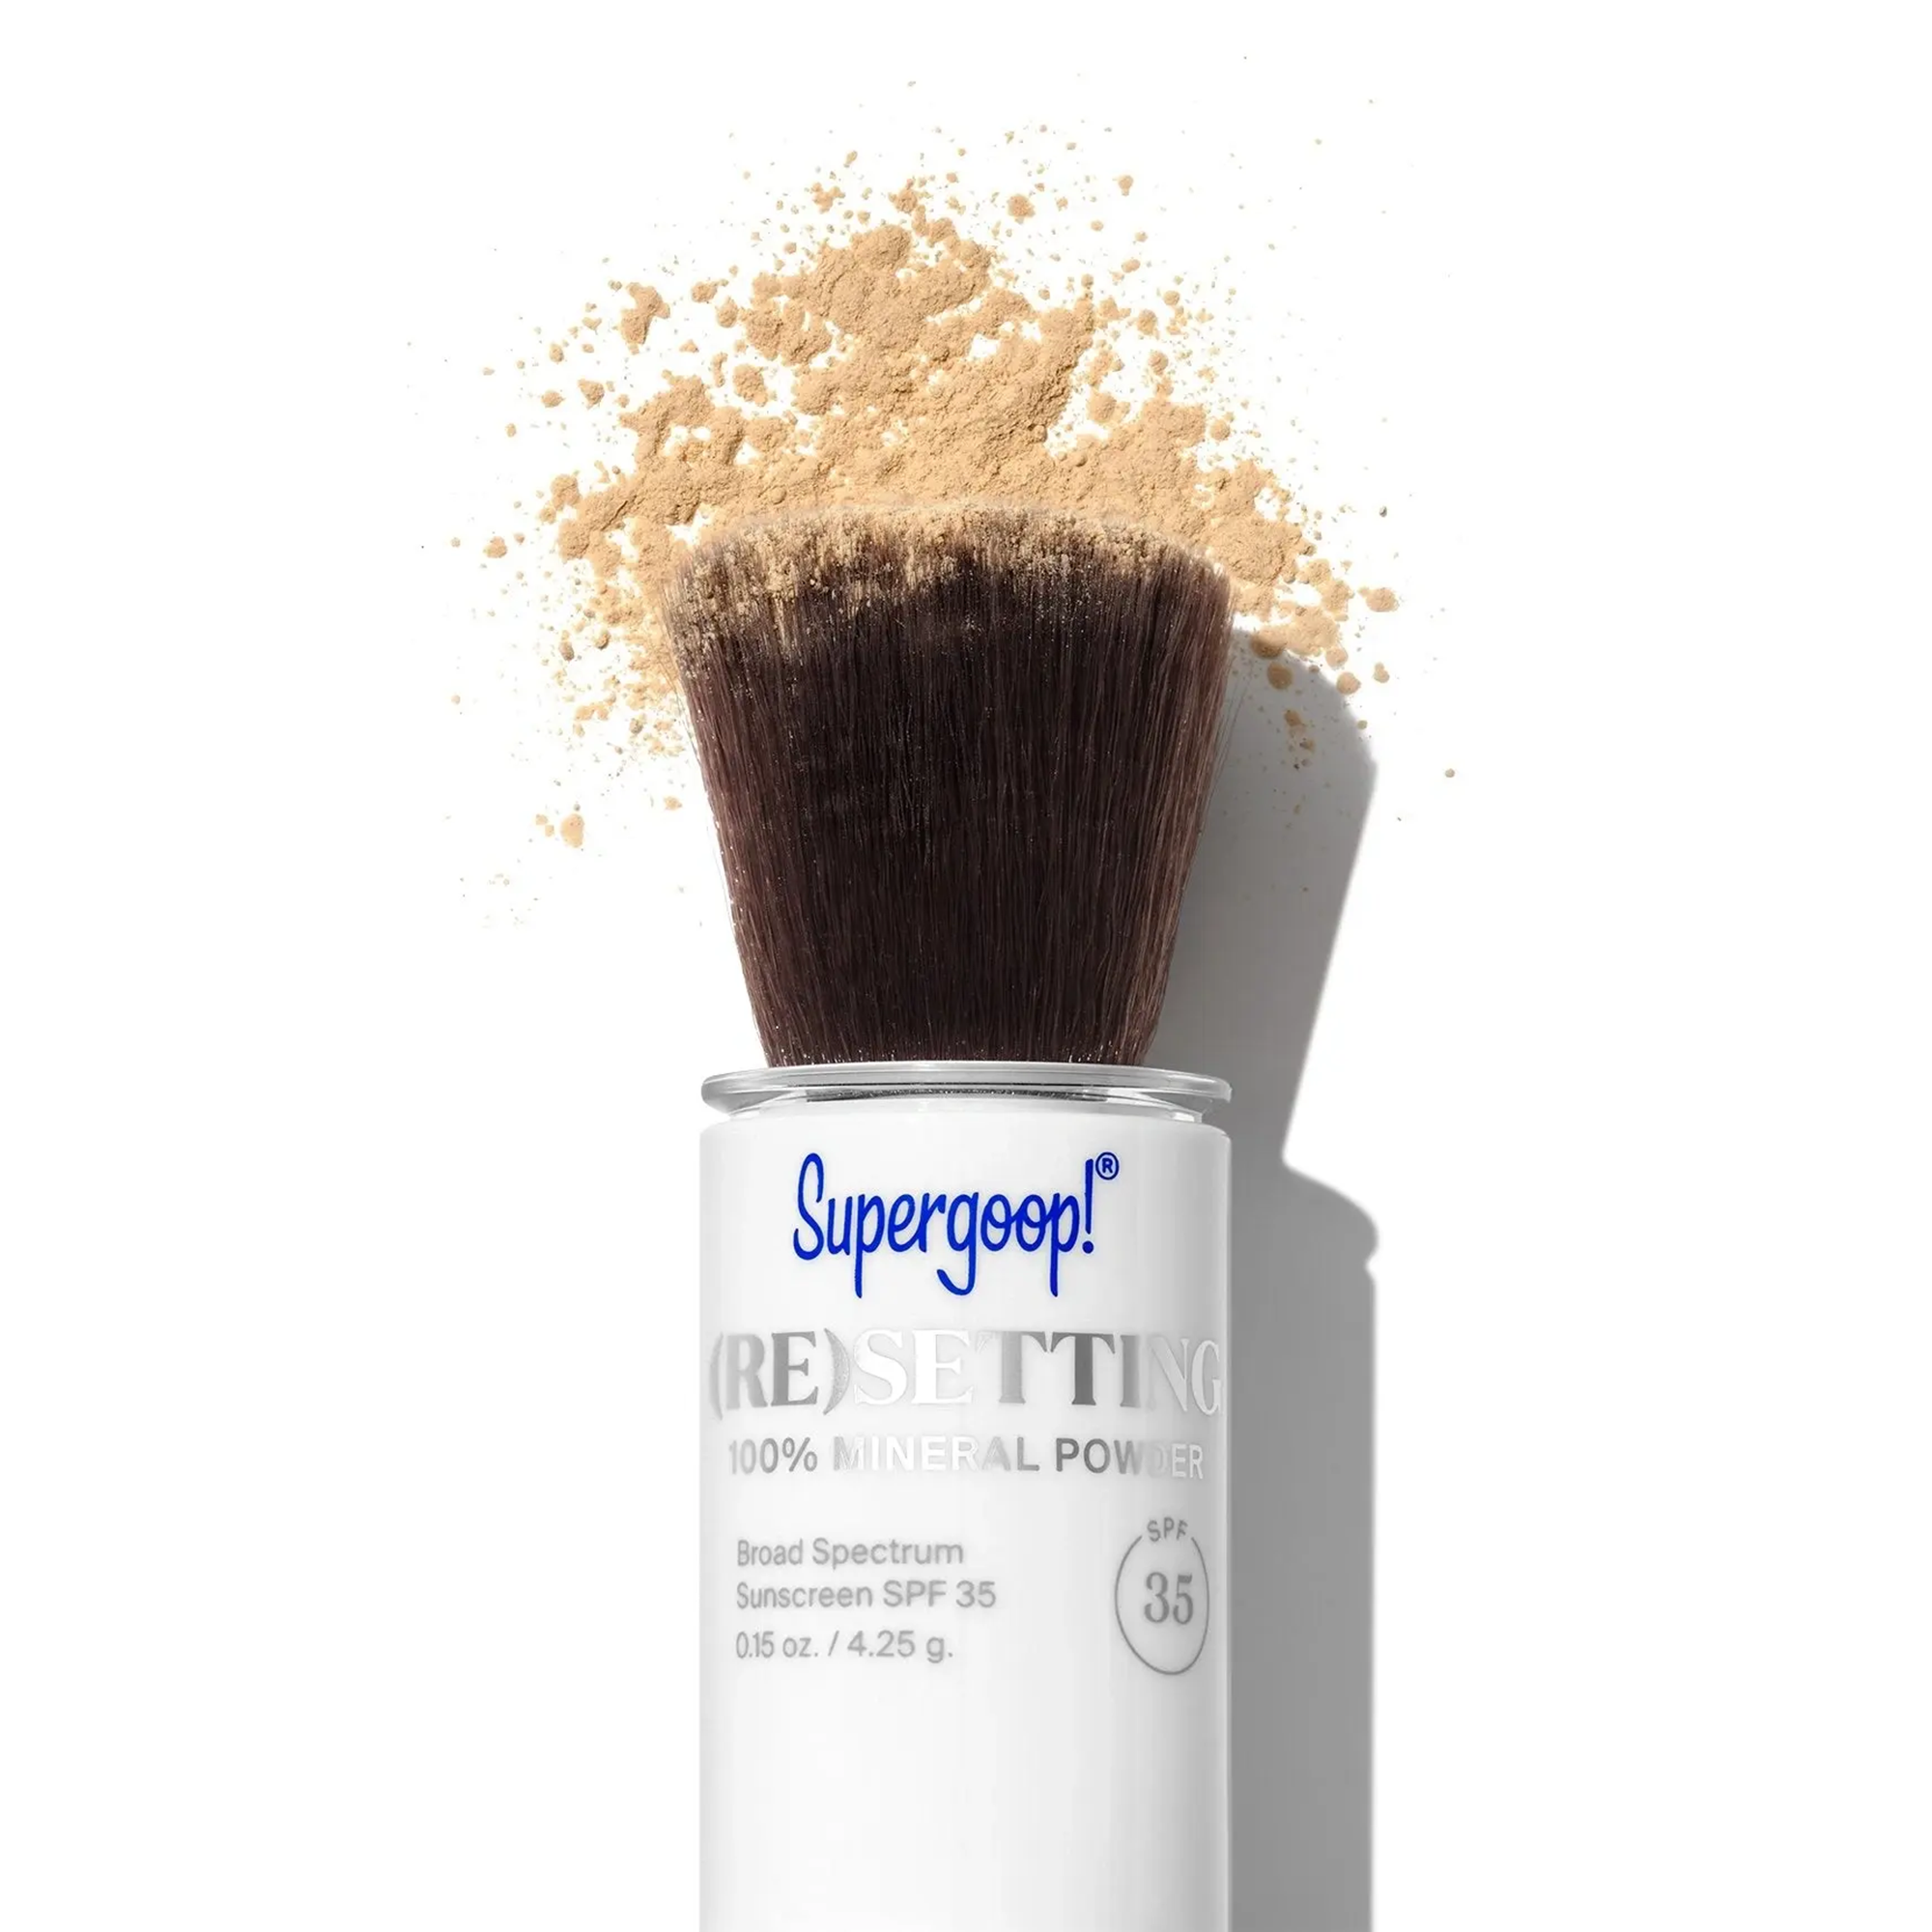 Supergoop! (Re)setting 100% Mineral Powder SPF 35 / LIGHT